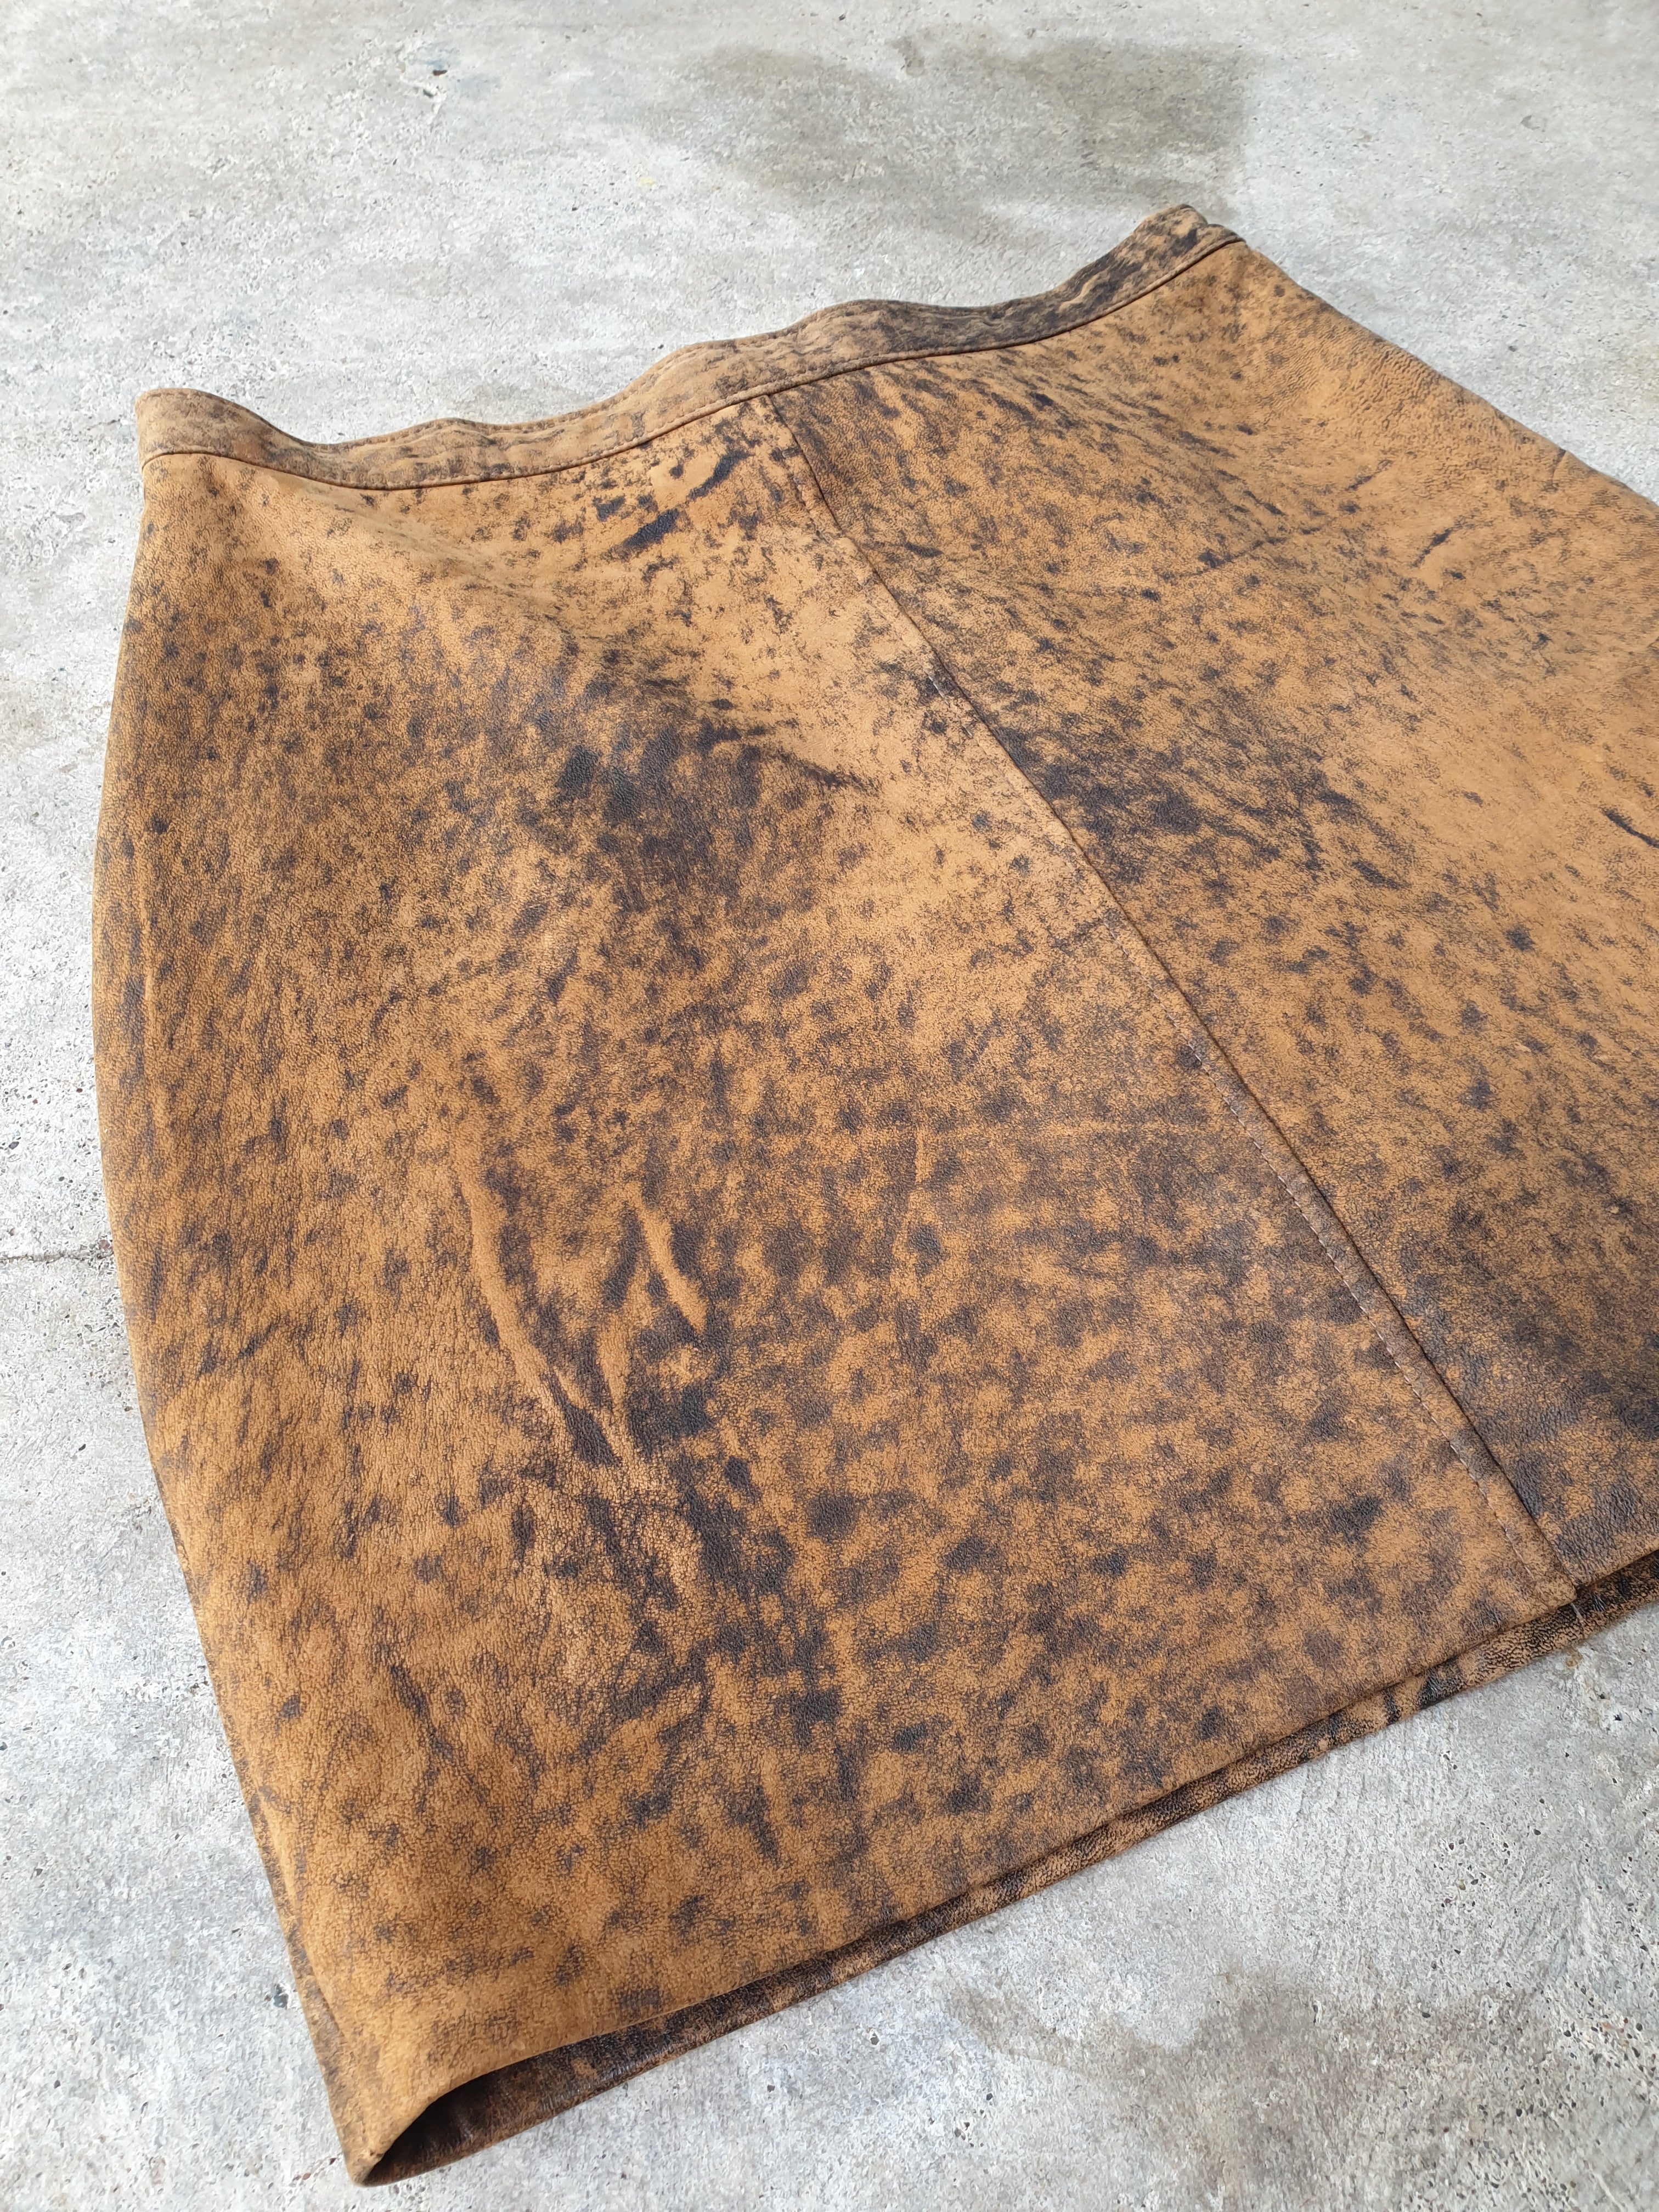 Vintage 80s Mottled Brown Leather Mini Skirt